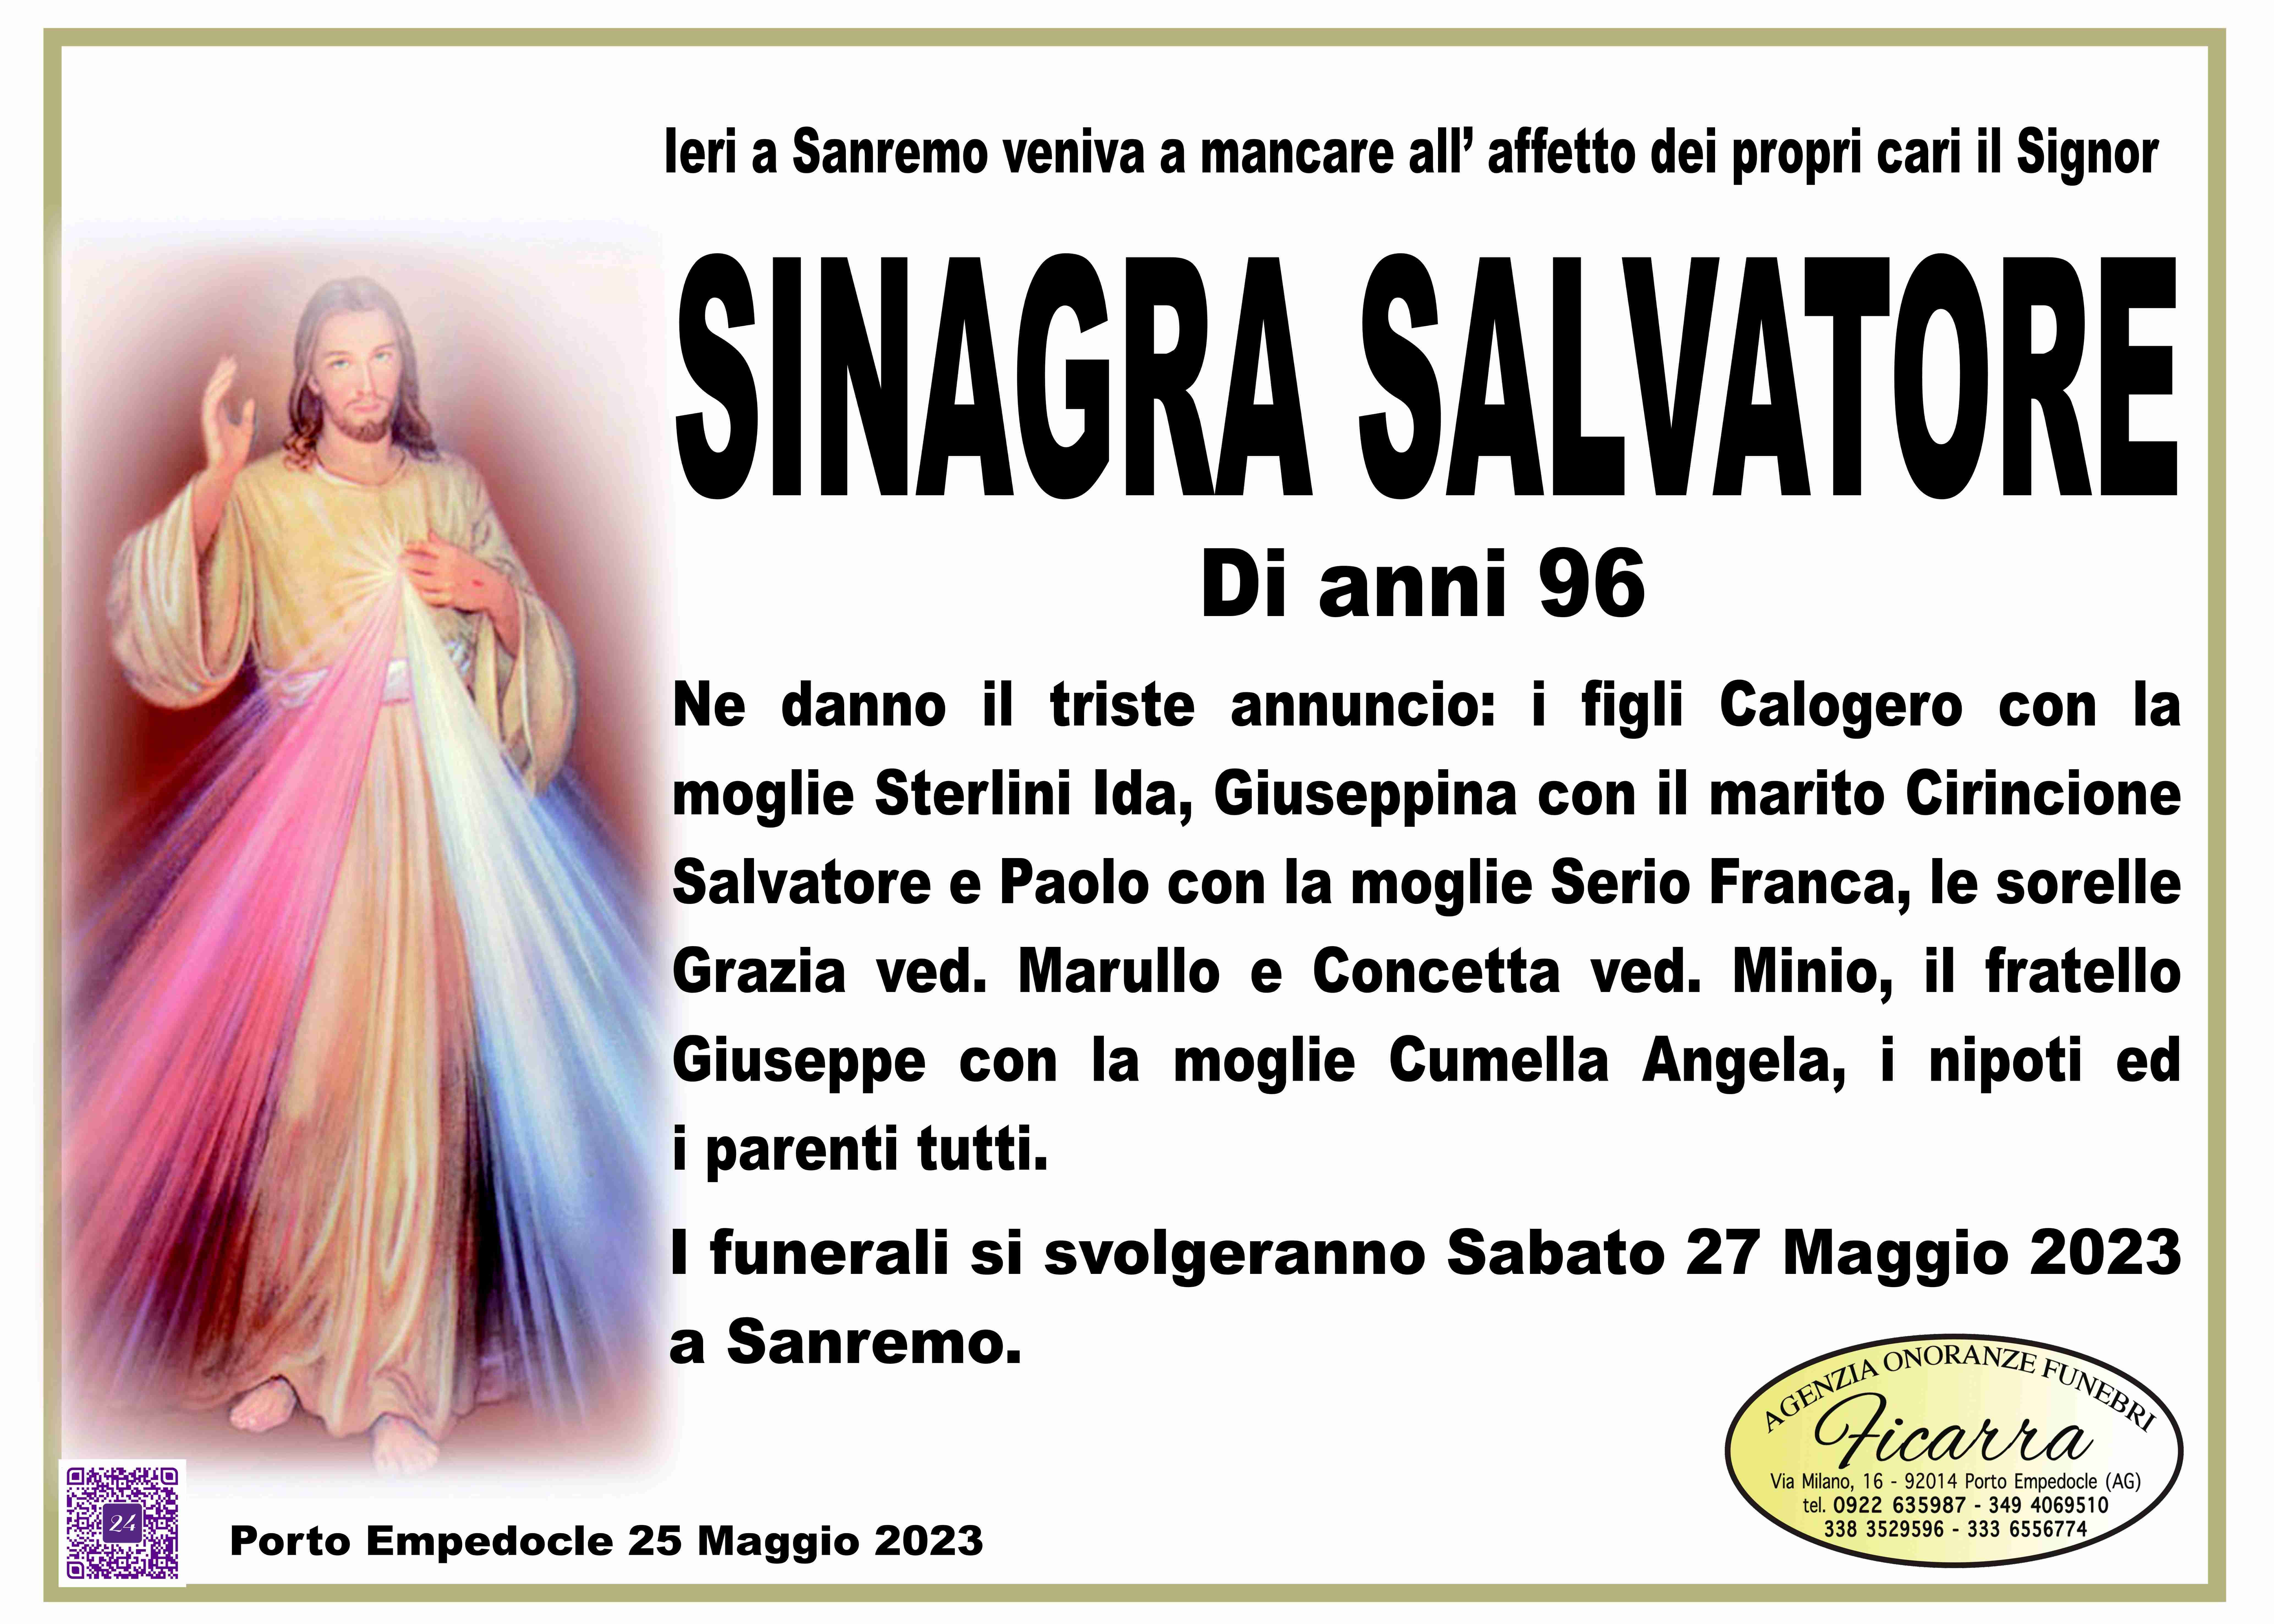 Salvatore Sinagra